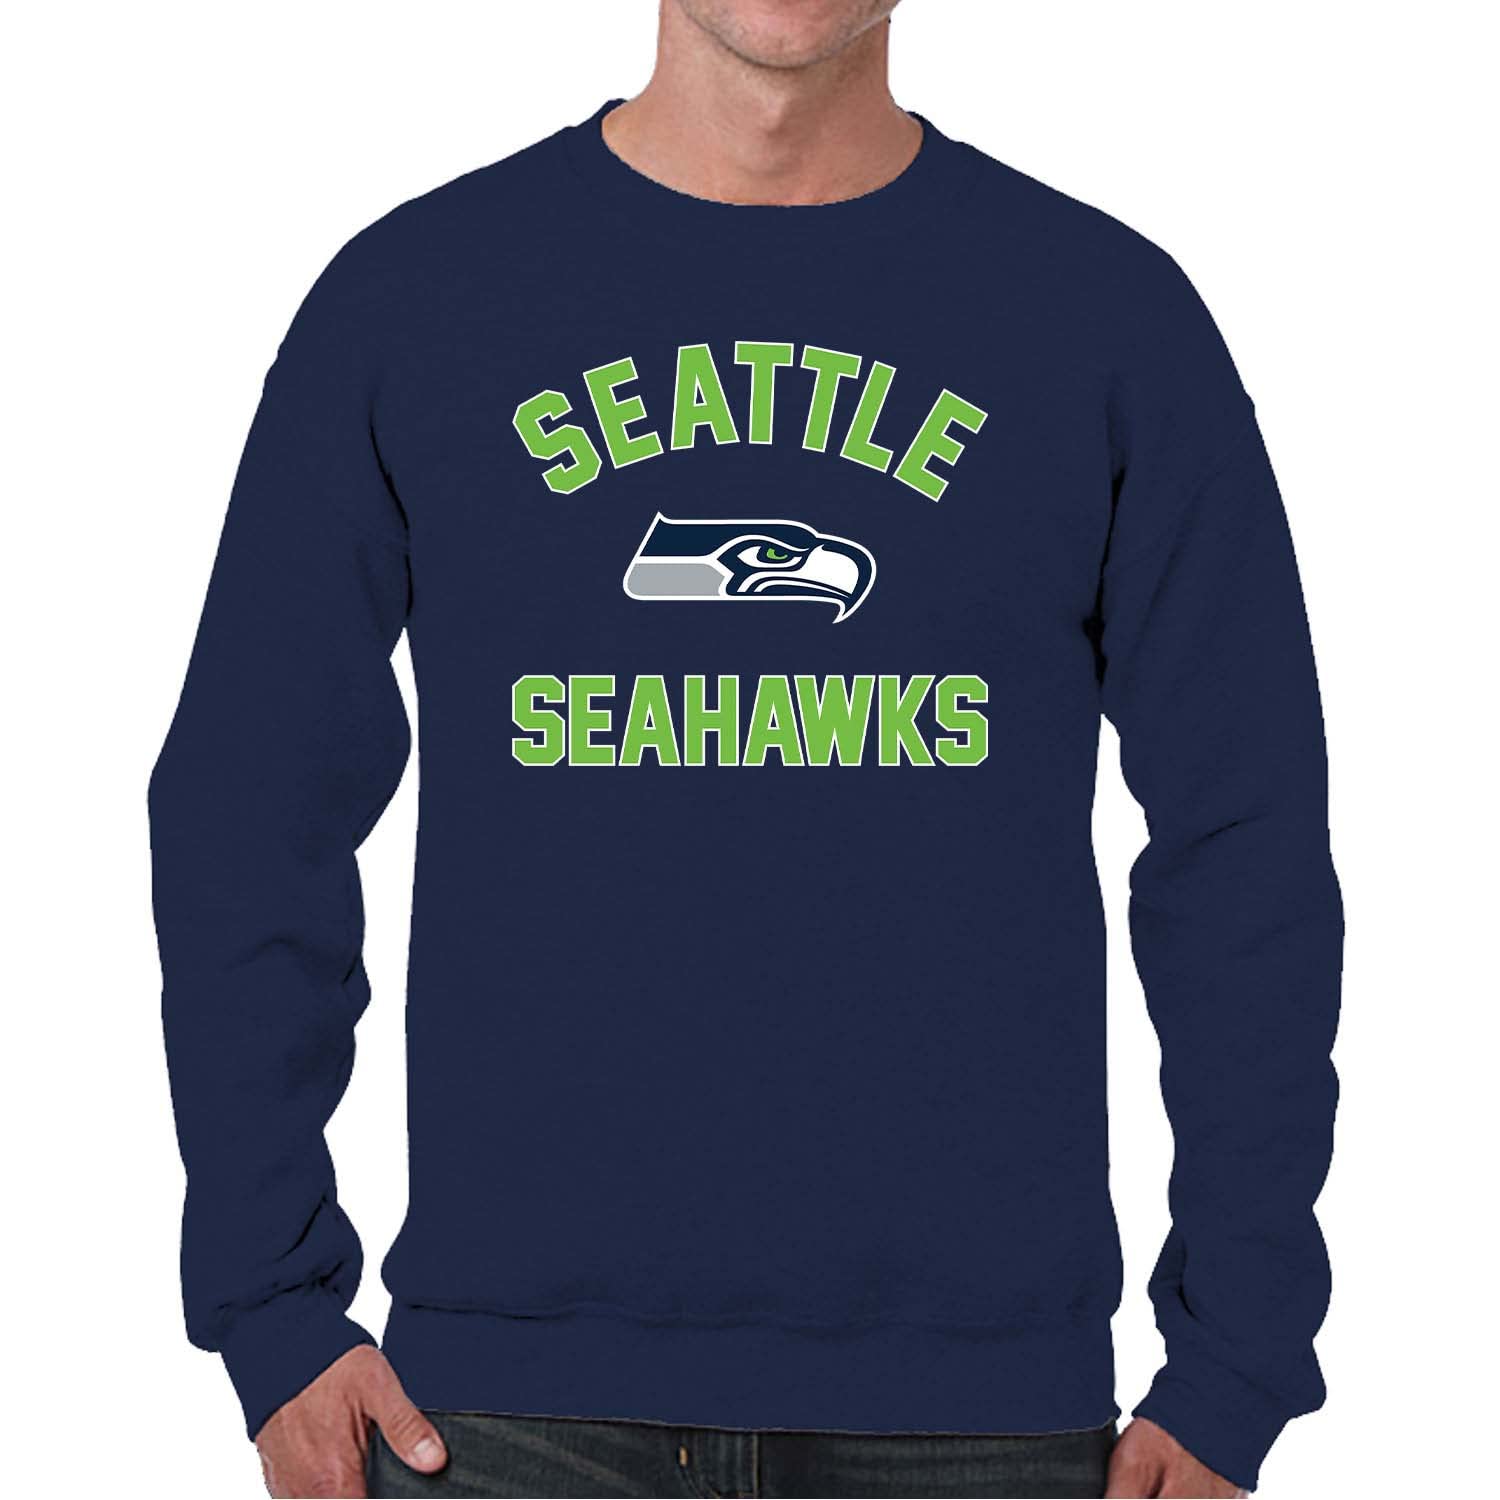 Team Fan Apparel NFL Gameday Adult Crewneck Sweatshirt, Lightweight Tagless Pullover Pro Football Sweatshirt (Seattle Seahawks - Blue, Adult XX-Large)